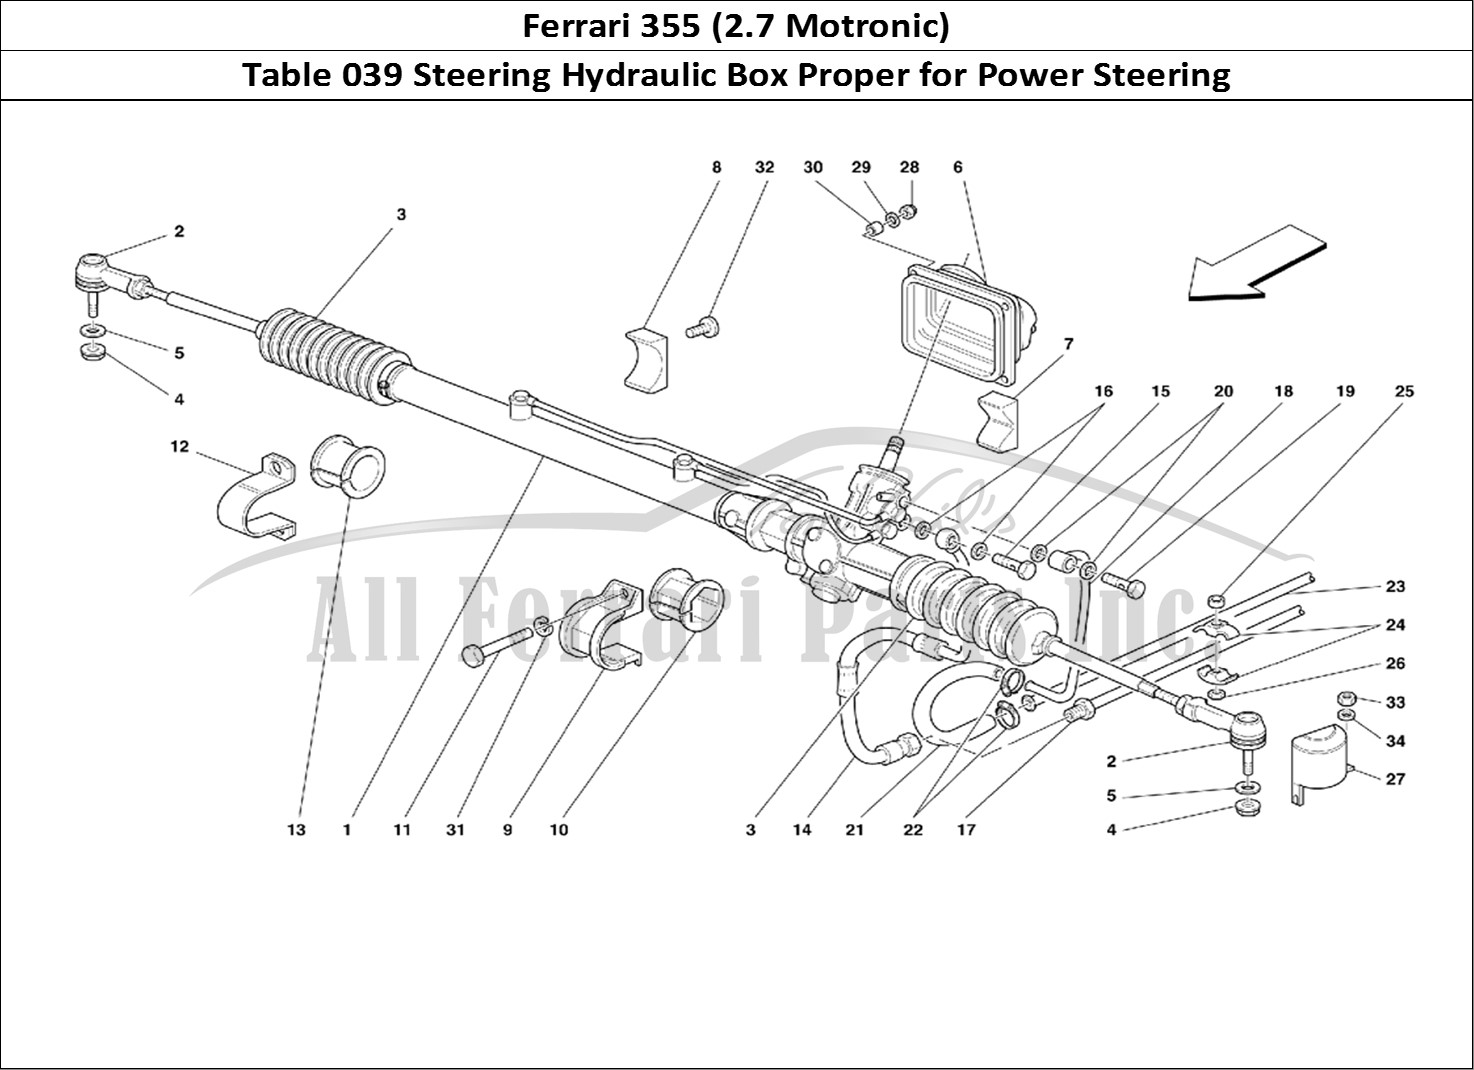 Ferrari Parts Ferrari 355 (2.7 Motronic) Page 039 Hydraulic Steering Box -V